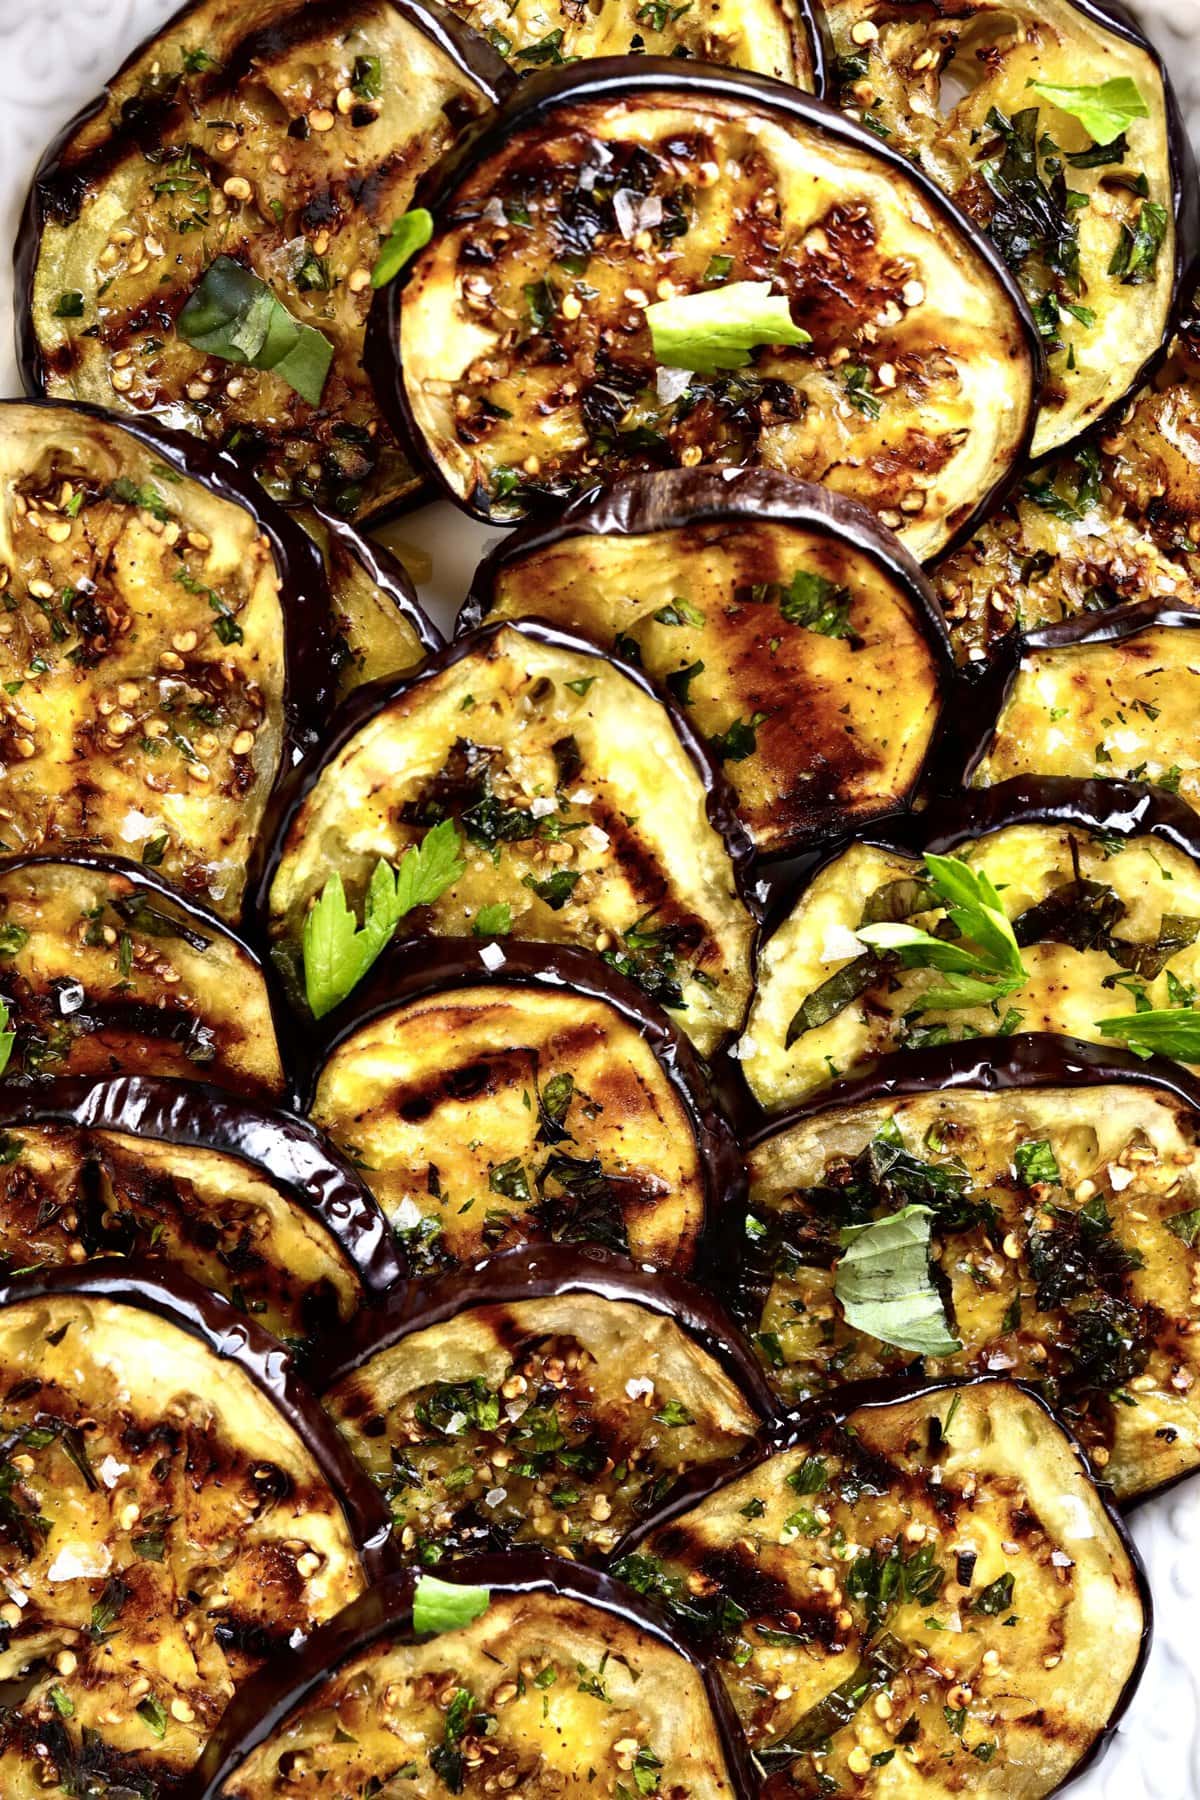 Easy Italian Grilled Eggplant Recipe (Melanzane grigliate) on a serving platter.